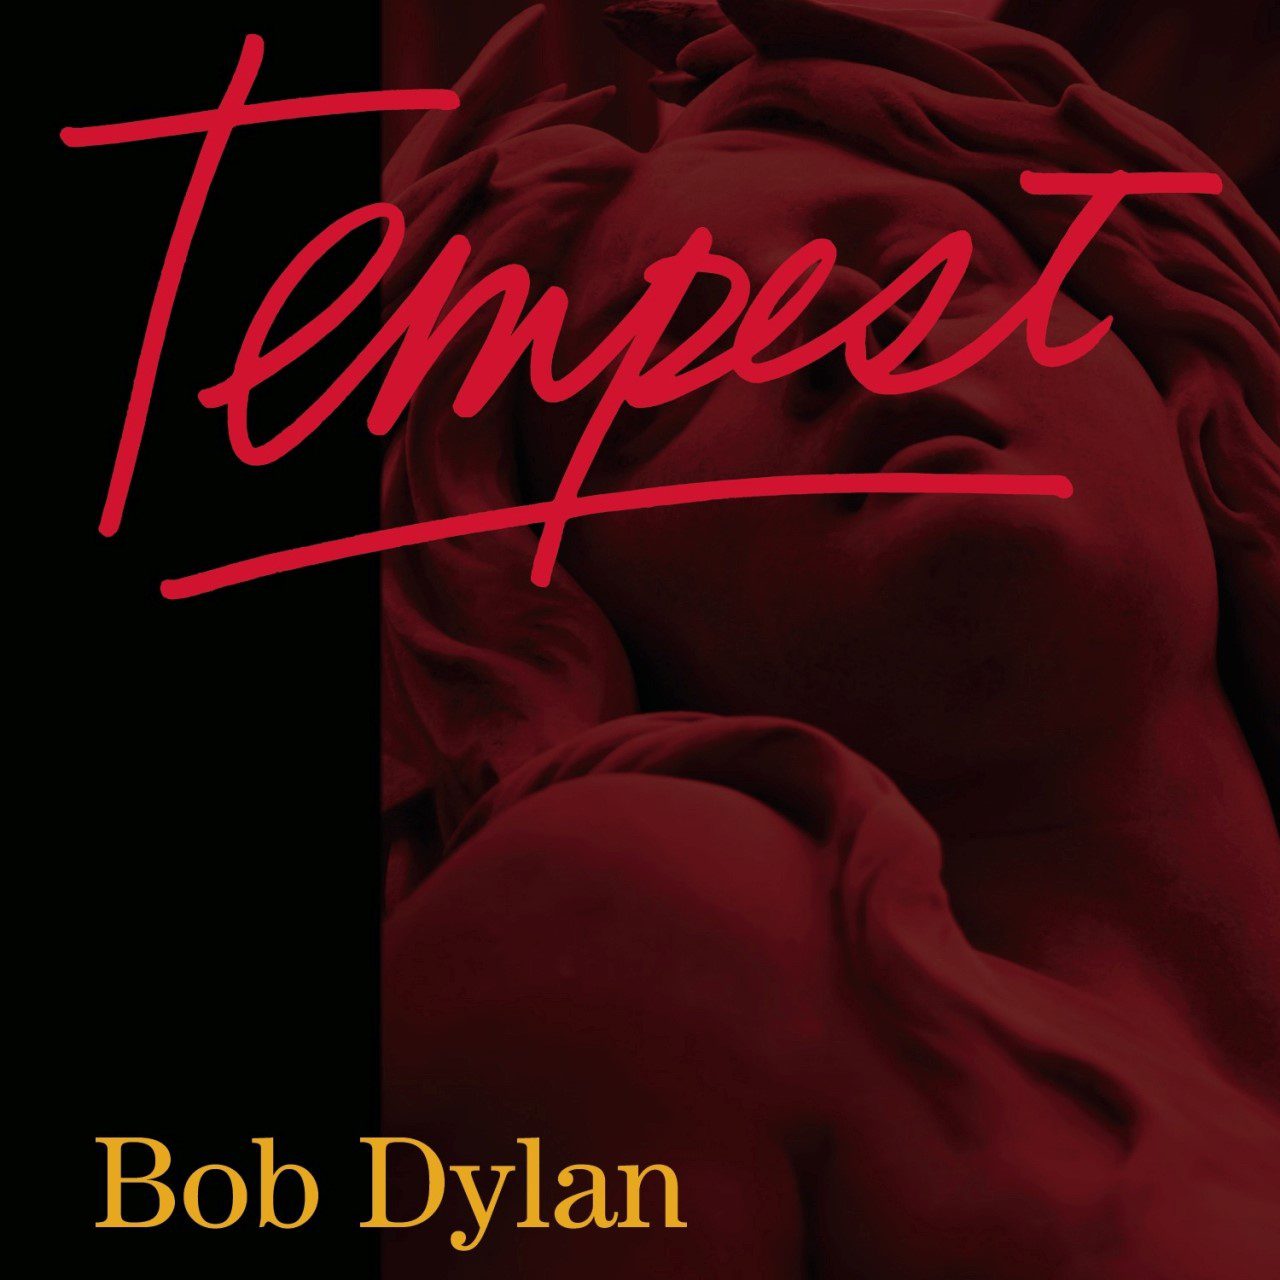 Bob Dylan - Tempest cover album